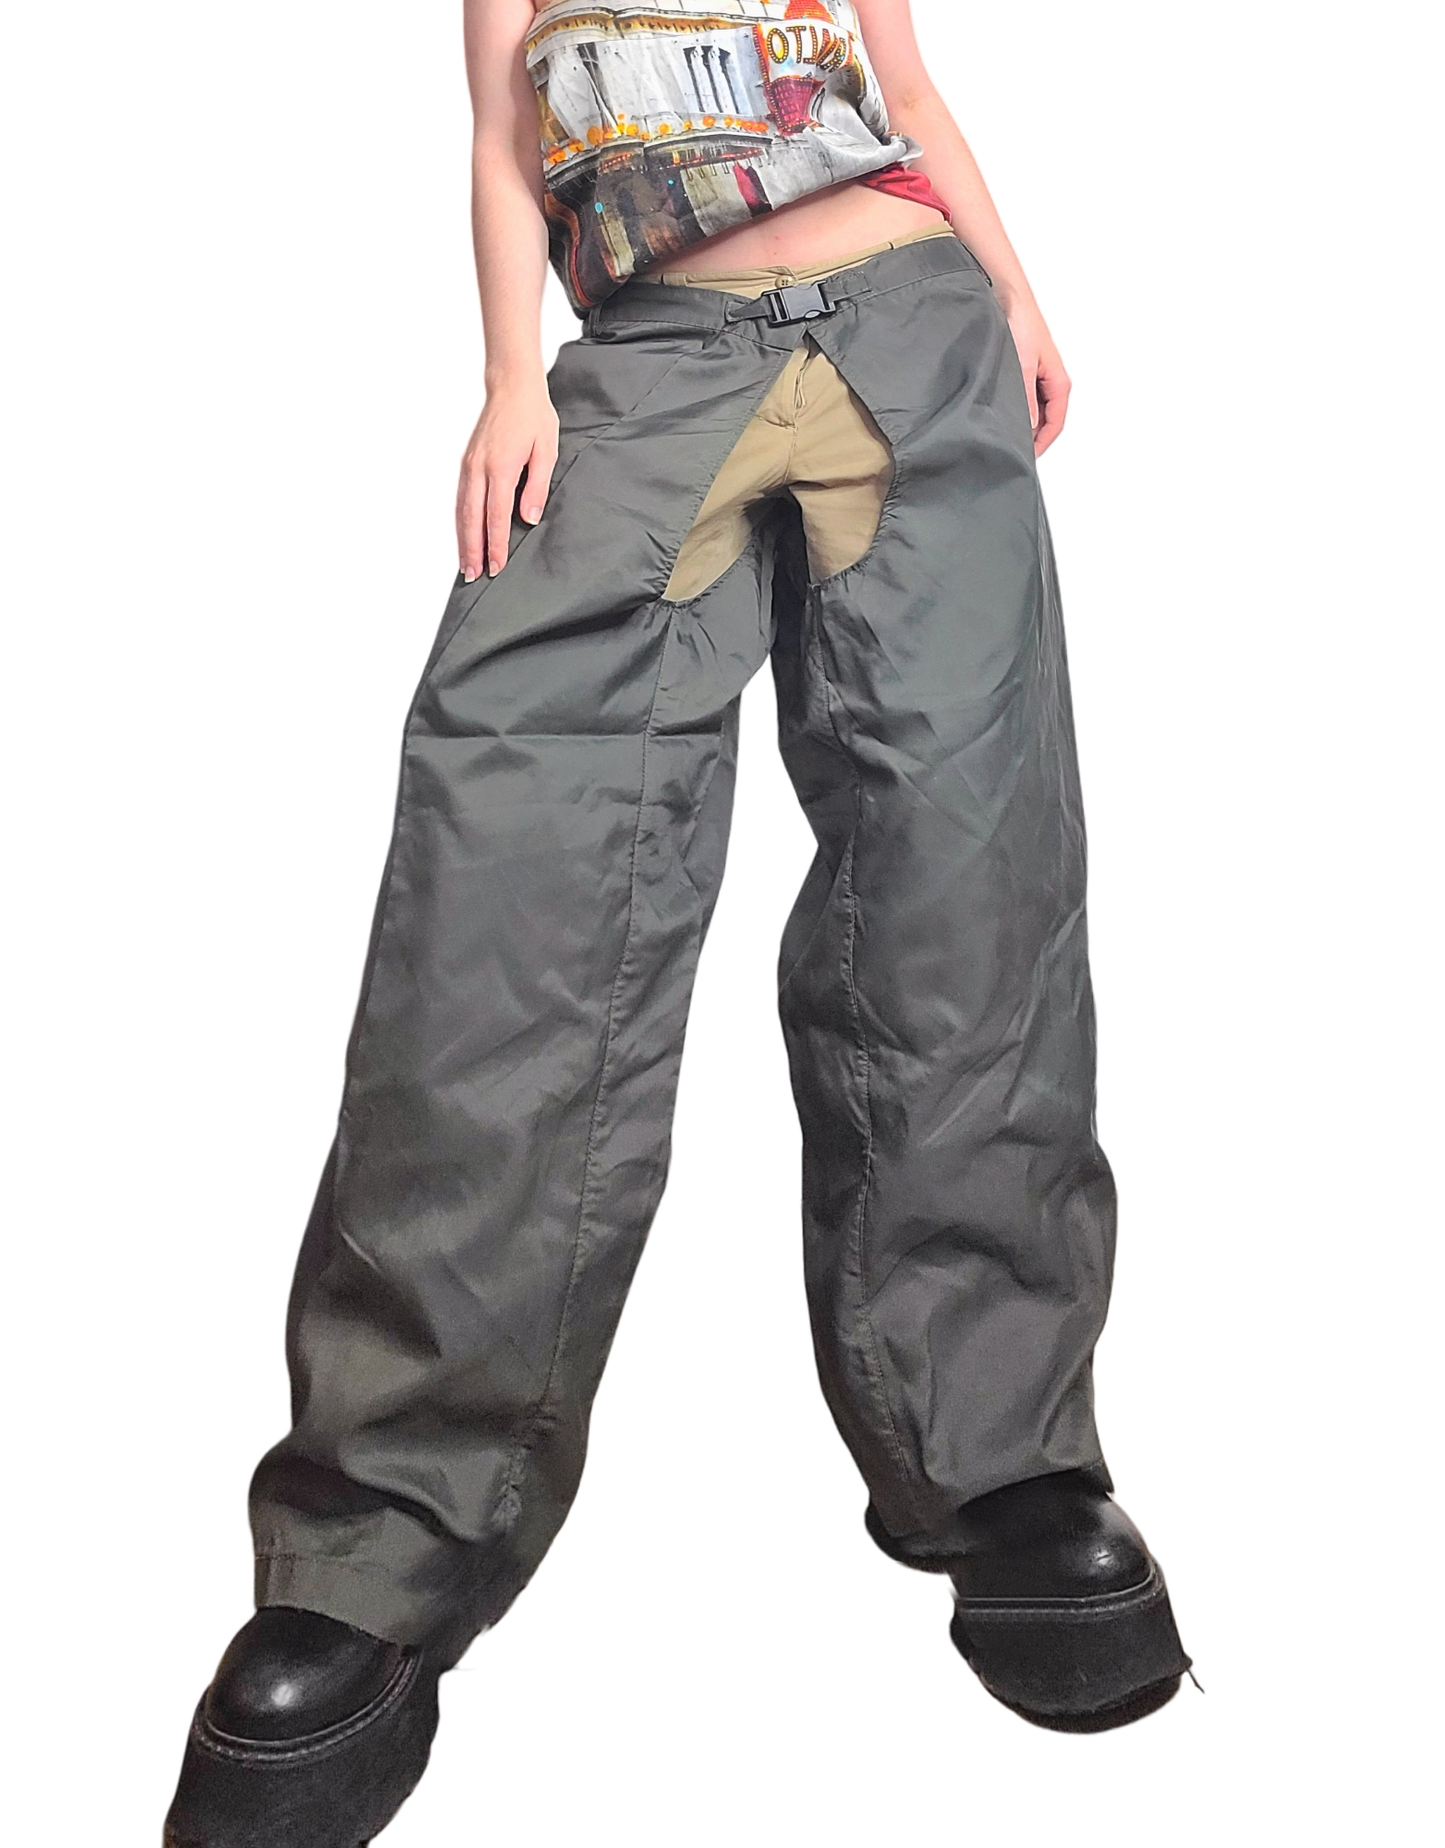 Sur pantalon gorpcore techwear oversize parachute cargo kaki vintage sportwear